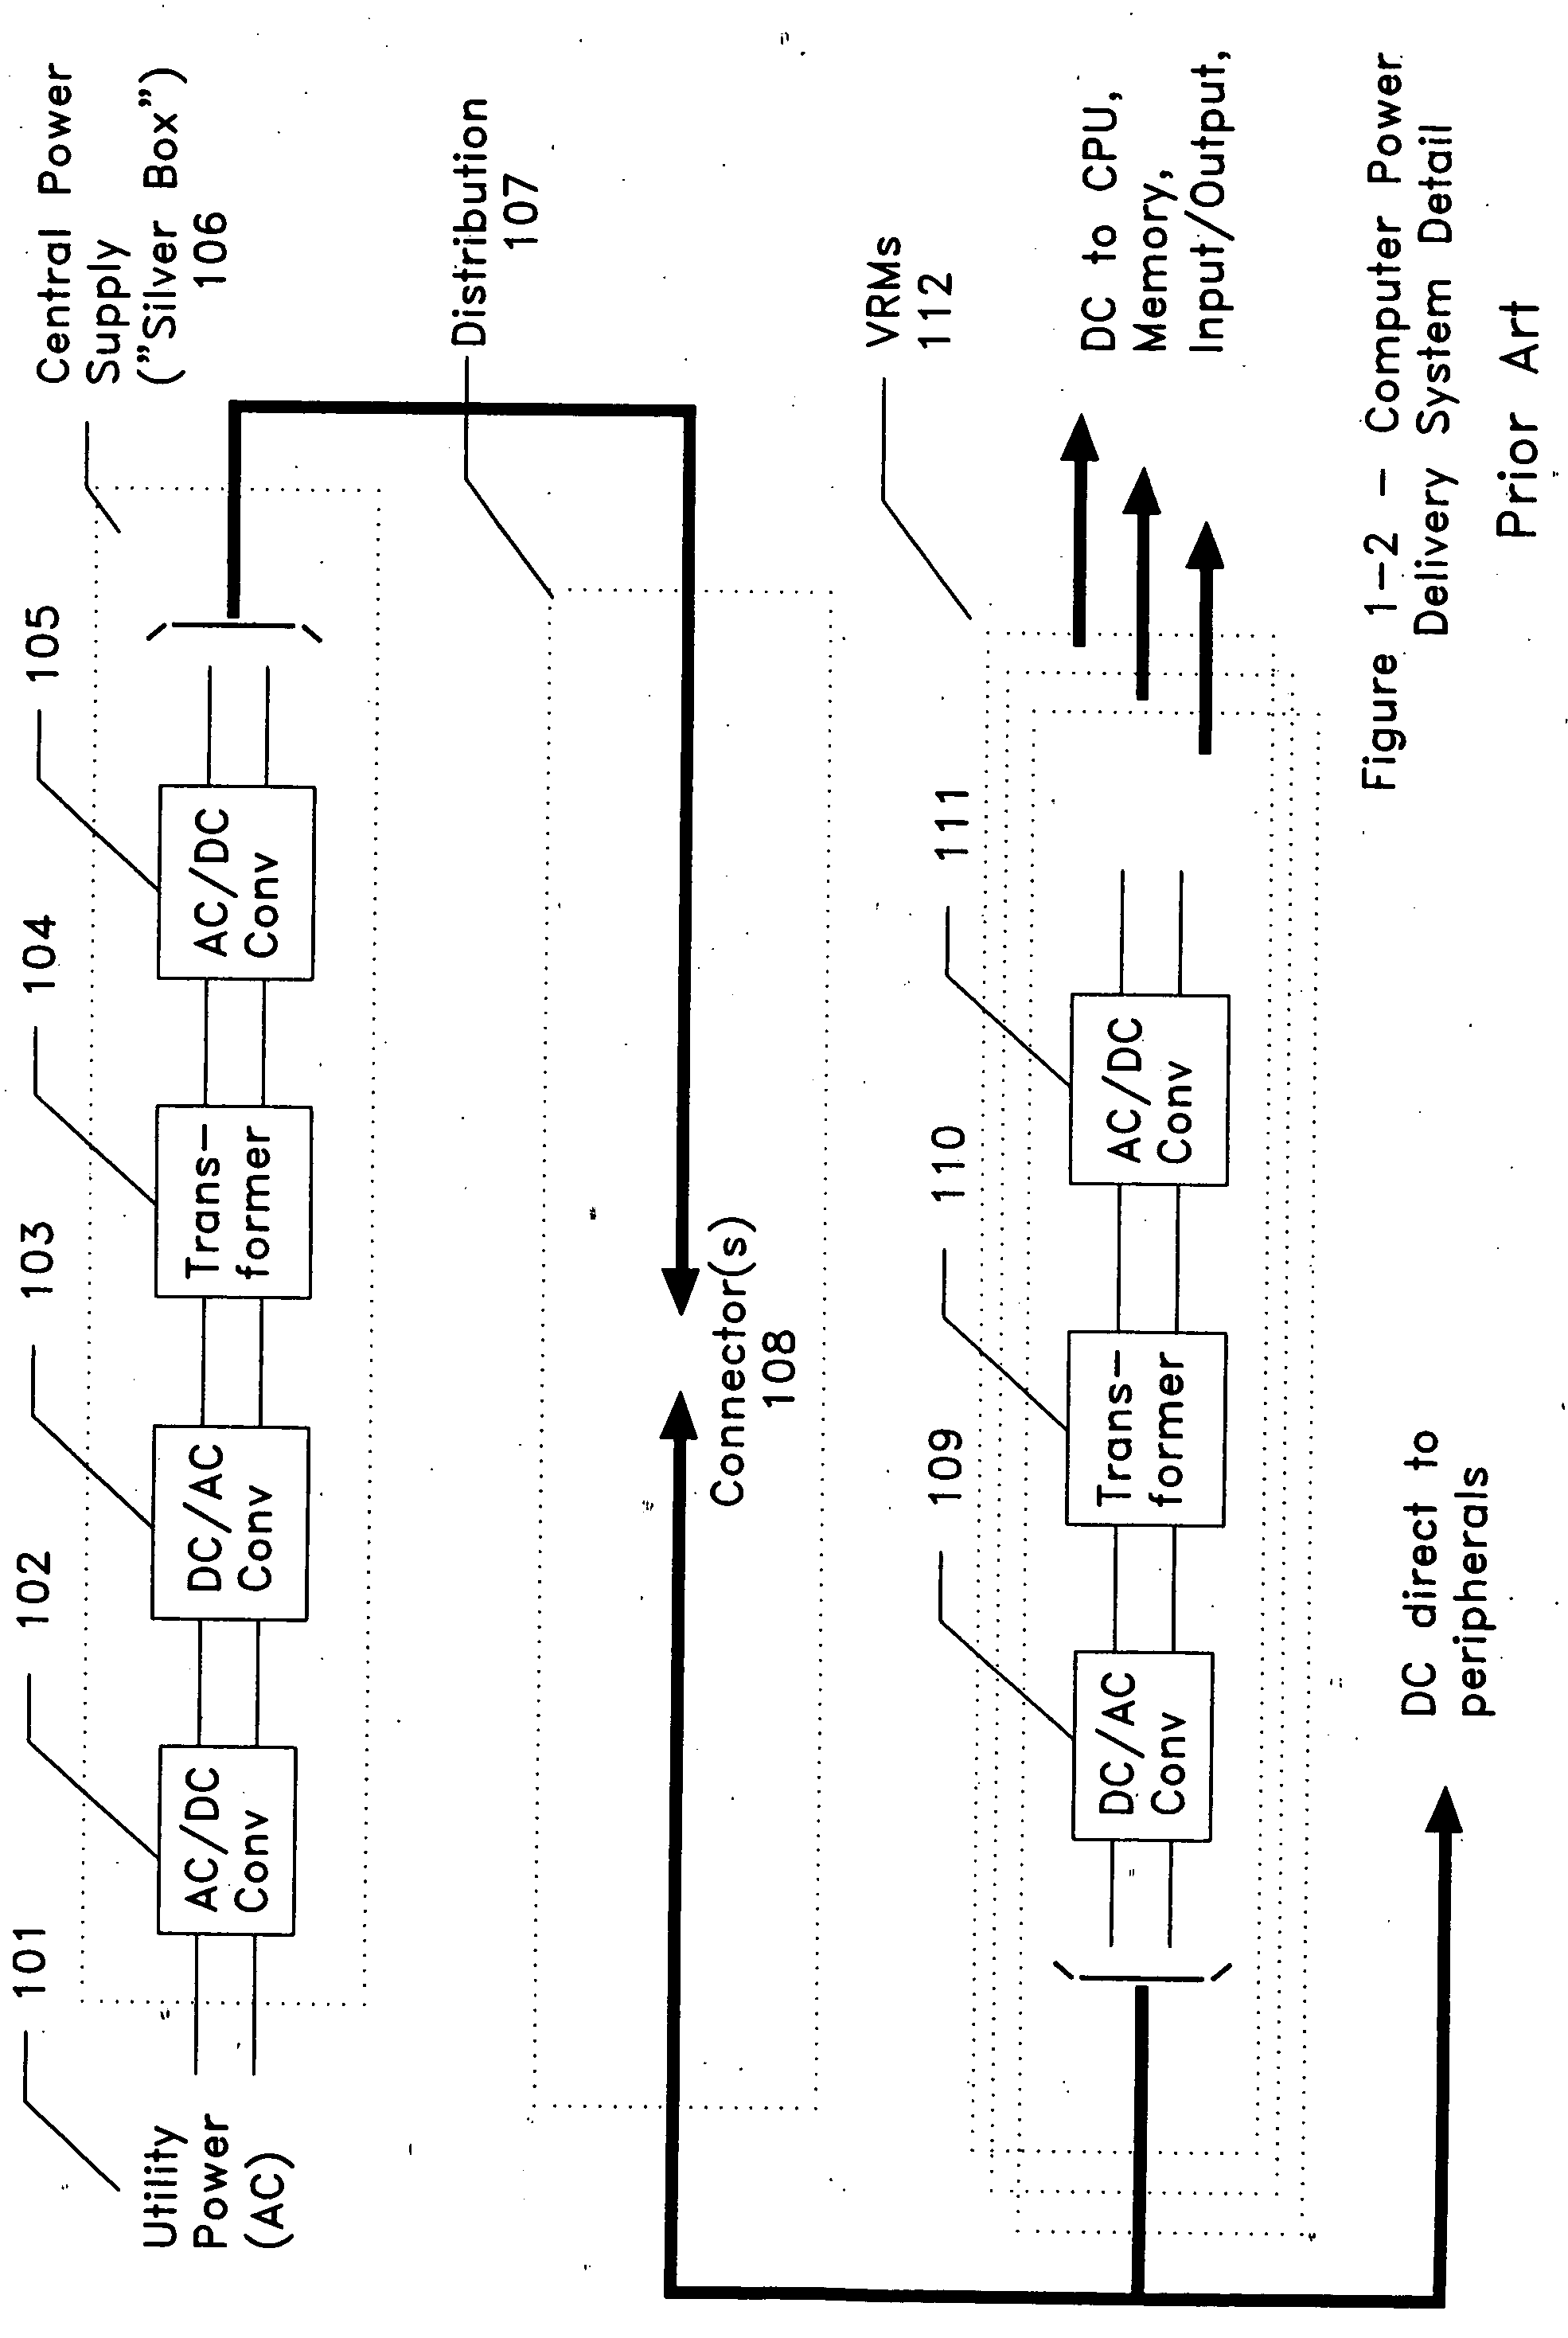 Rapid current demand microprocessor supply circuit